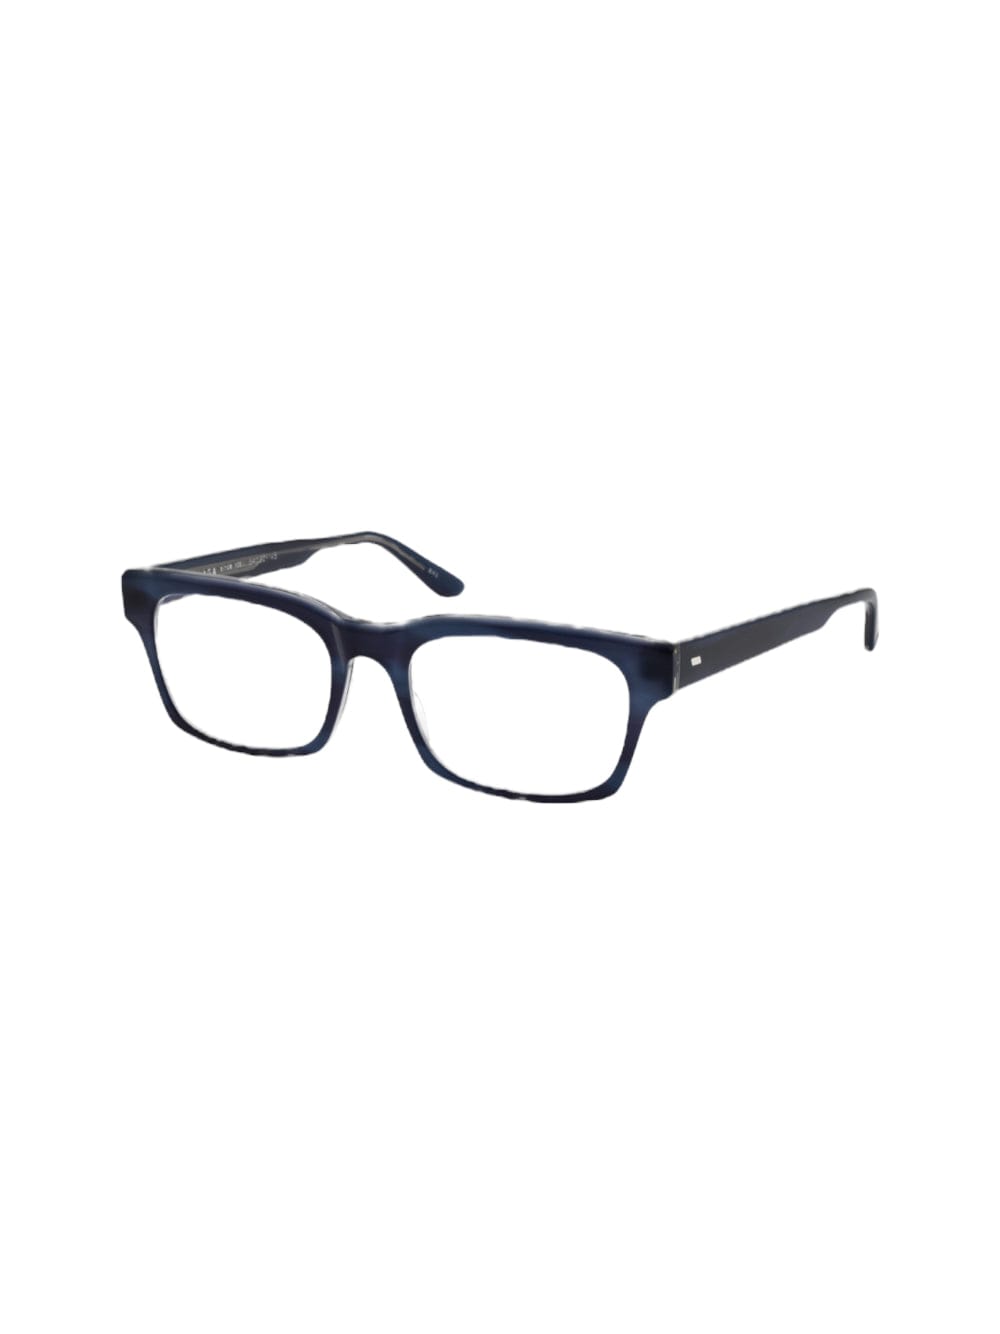 Masunaga 093 - Blue Navy Glasses